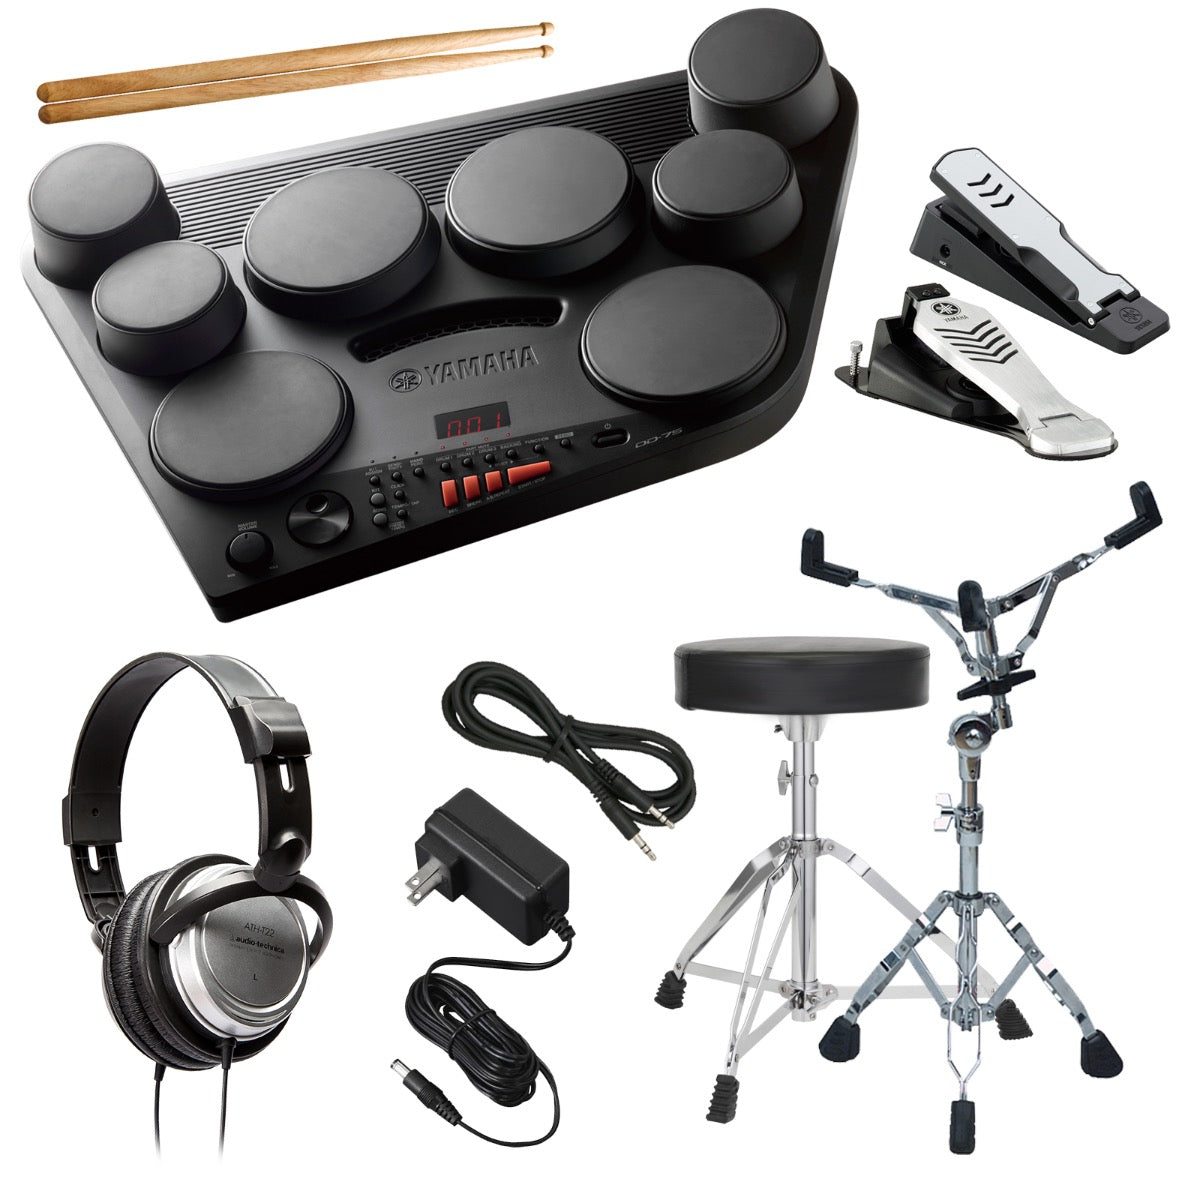 Yamaha DD-75 Digital Drum Kit with Power Adapter DRUM ESSENTIALS